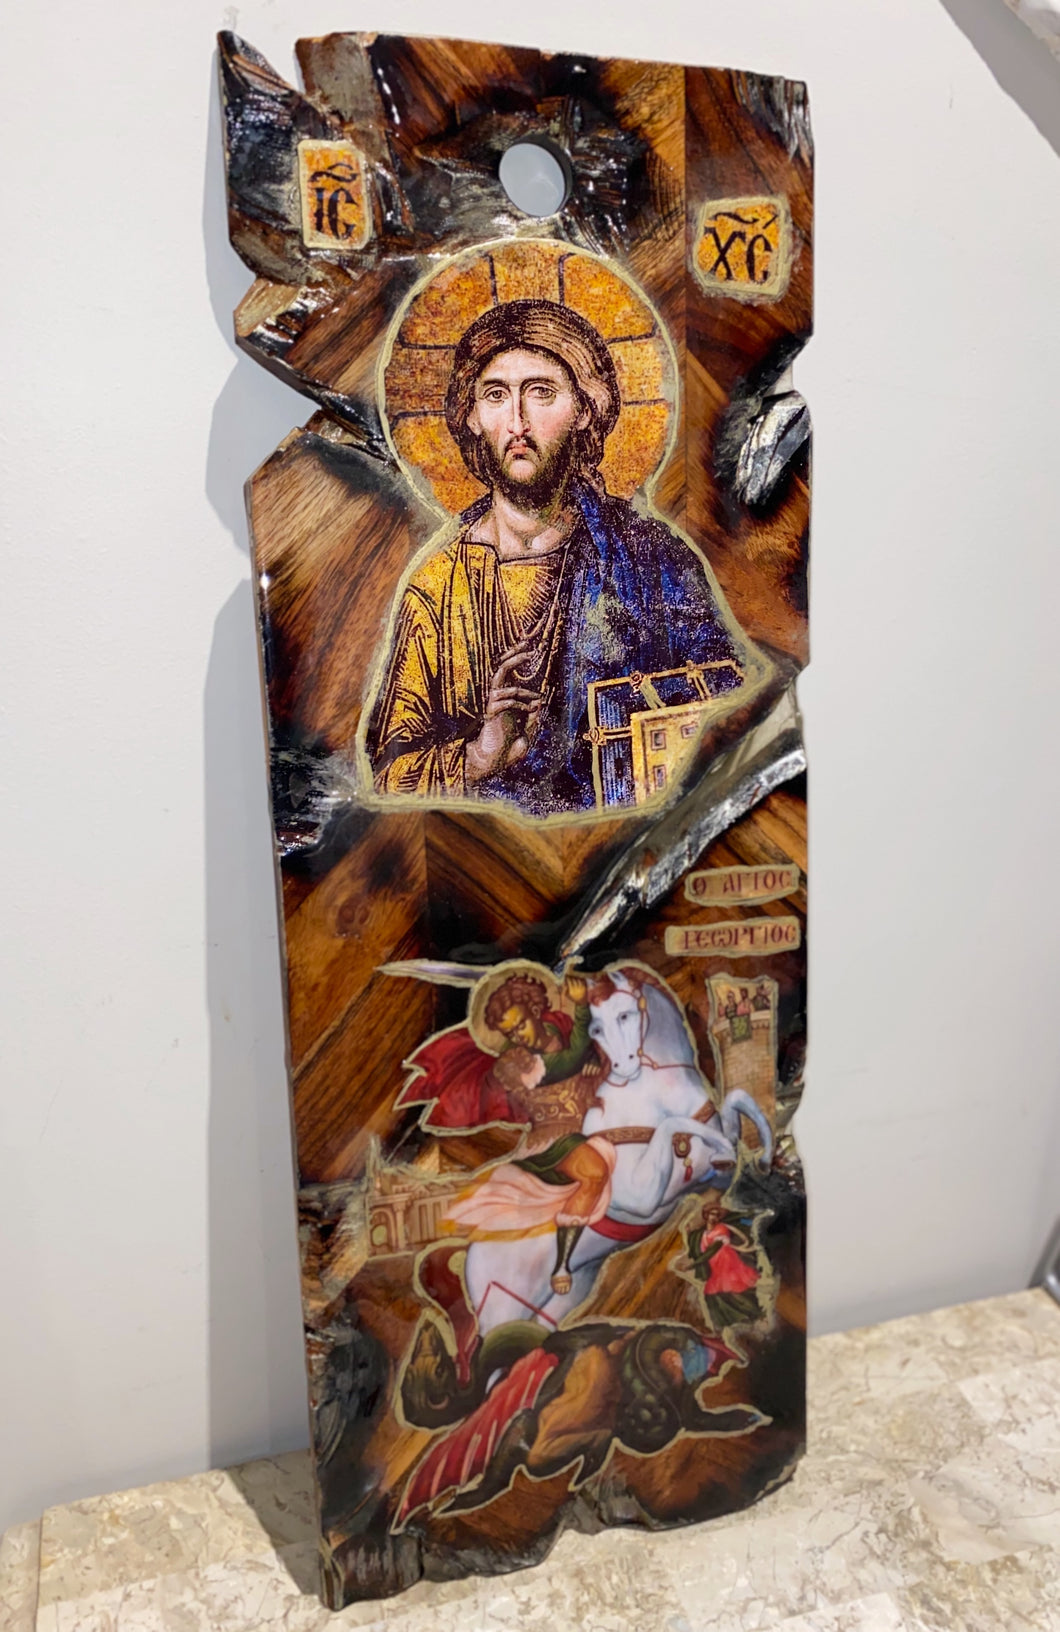 Jesus Christ & Saint George religious icon - Large